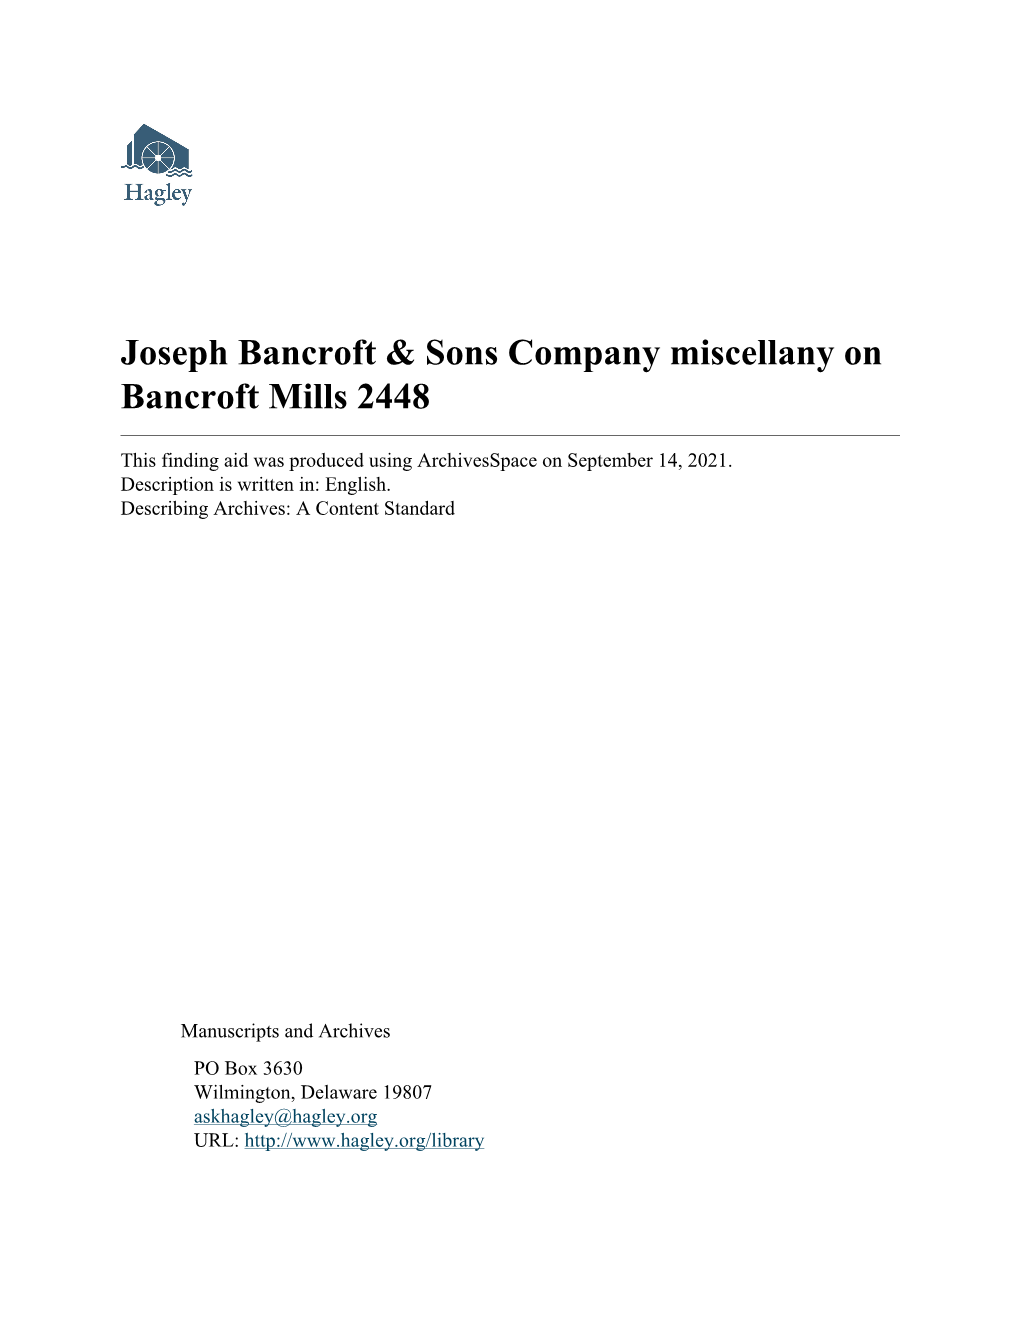 Joseph Bancroft & Sons Company Miscellany on Bancroft Mills 2448